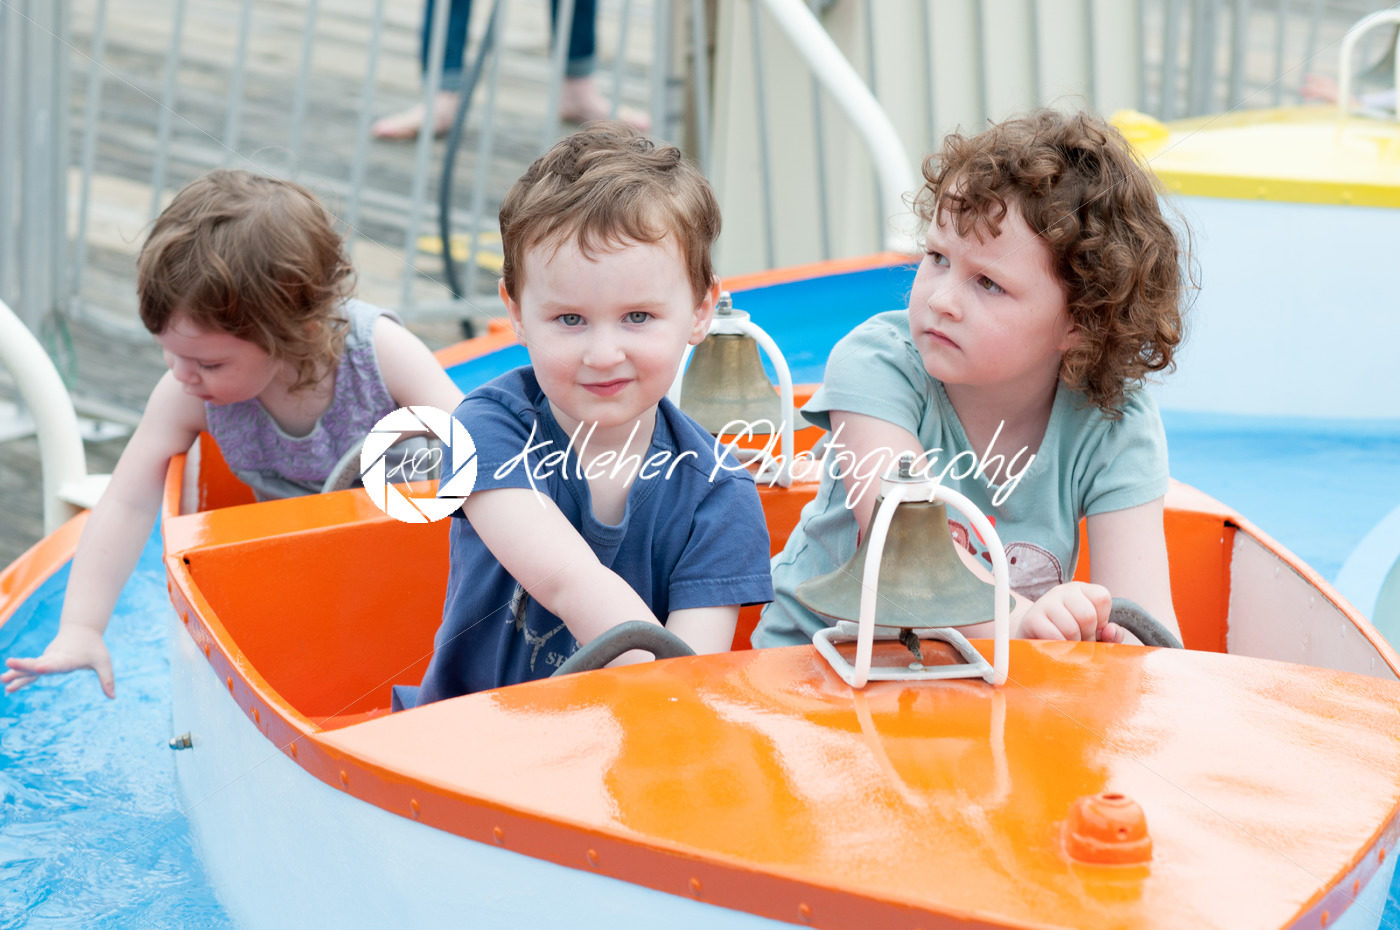 Young toddler sibblings having fun on boardwalk amusement ride - Kelleher Photography Store